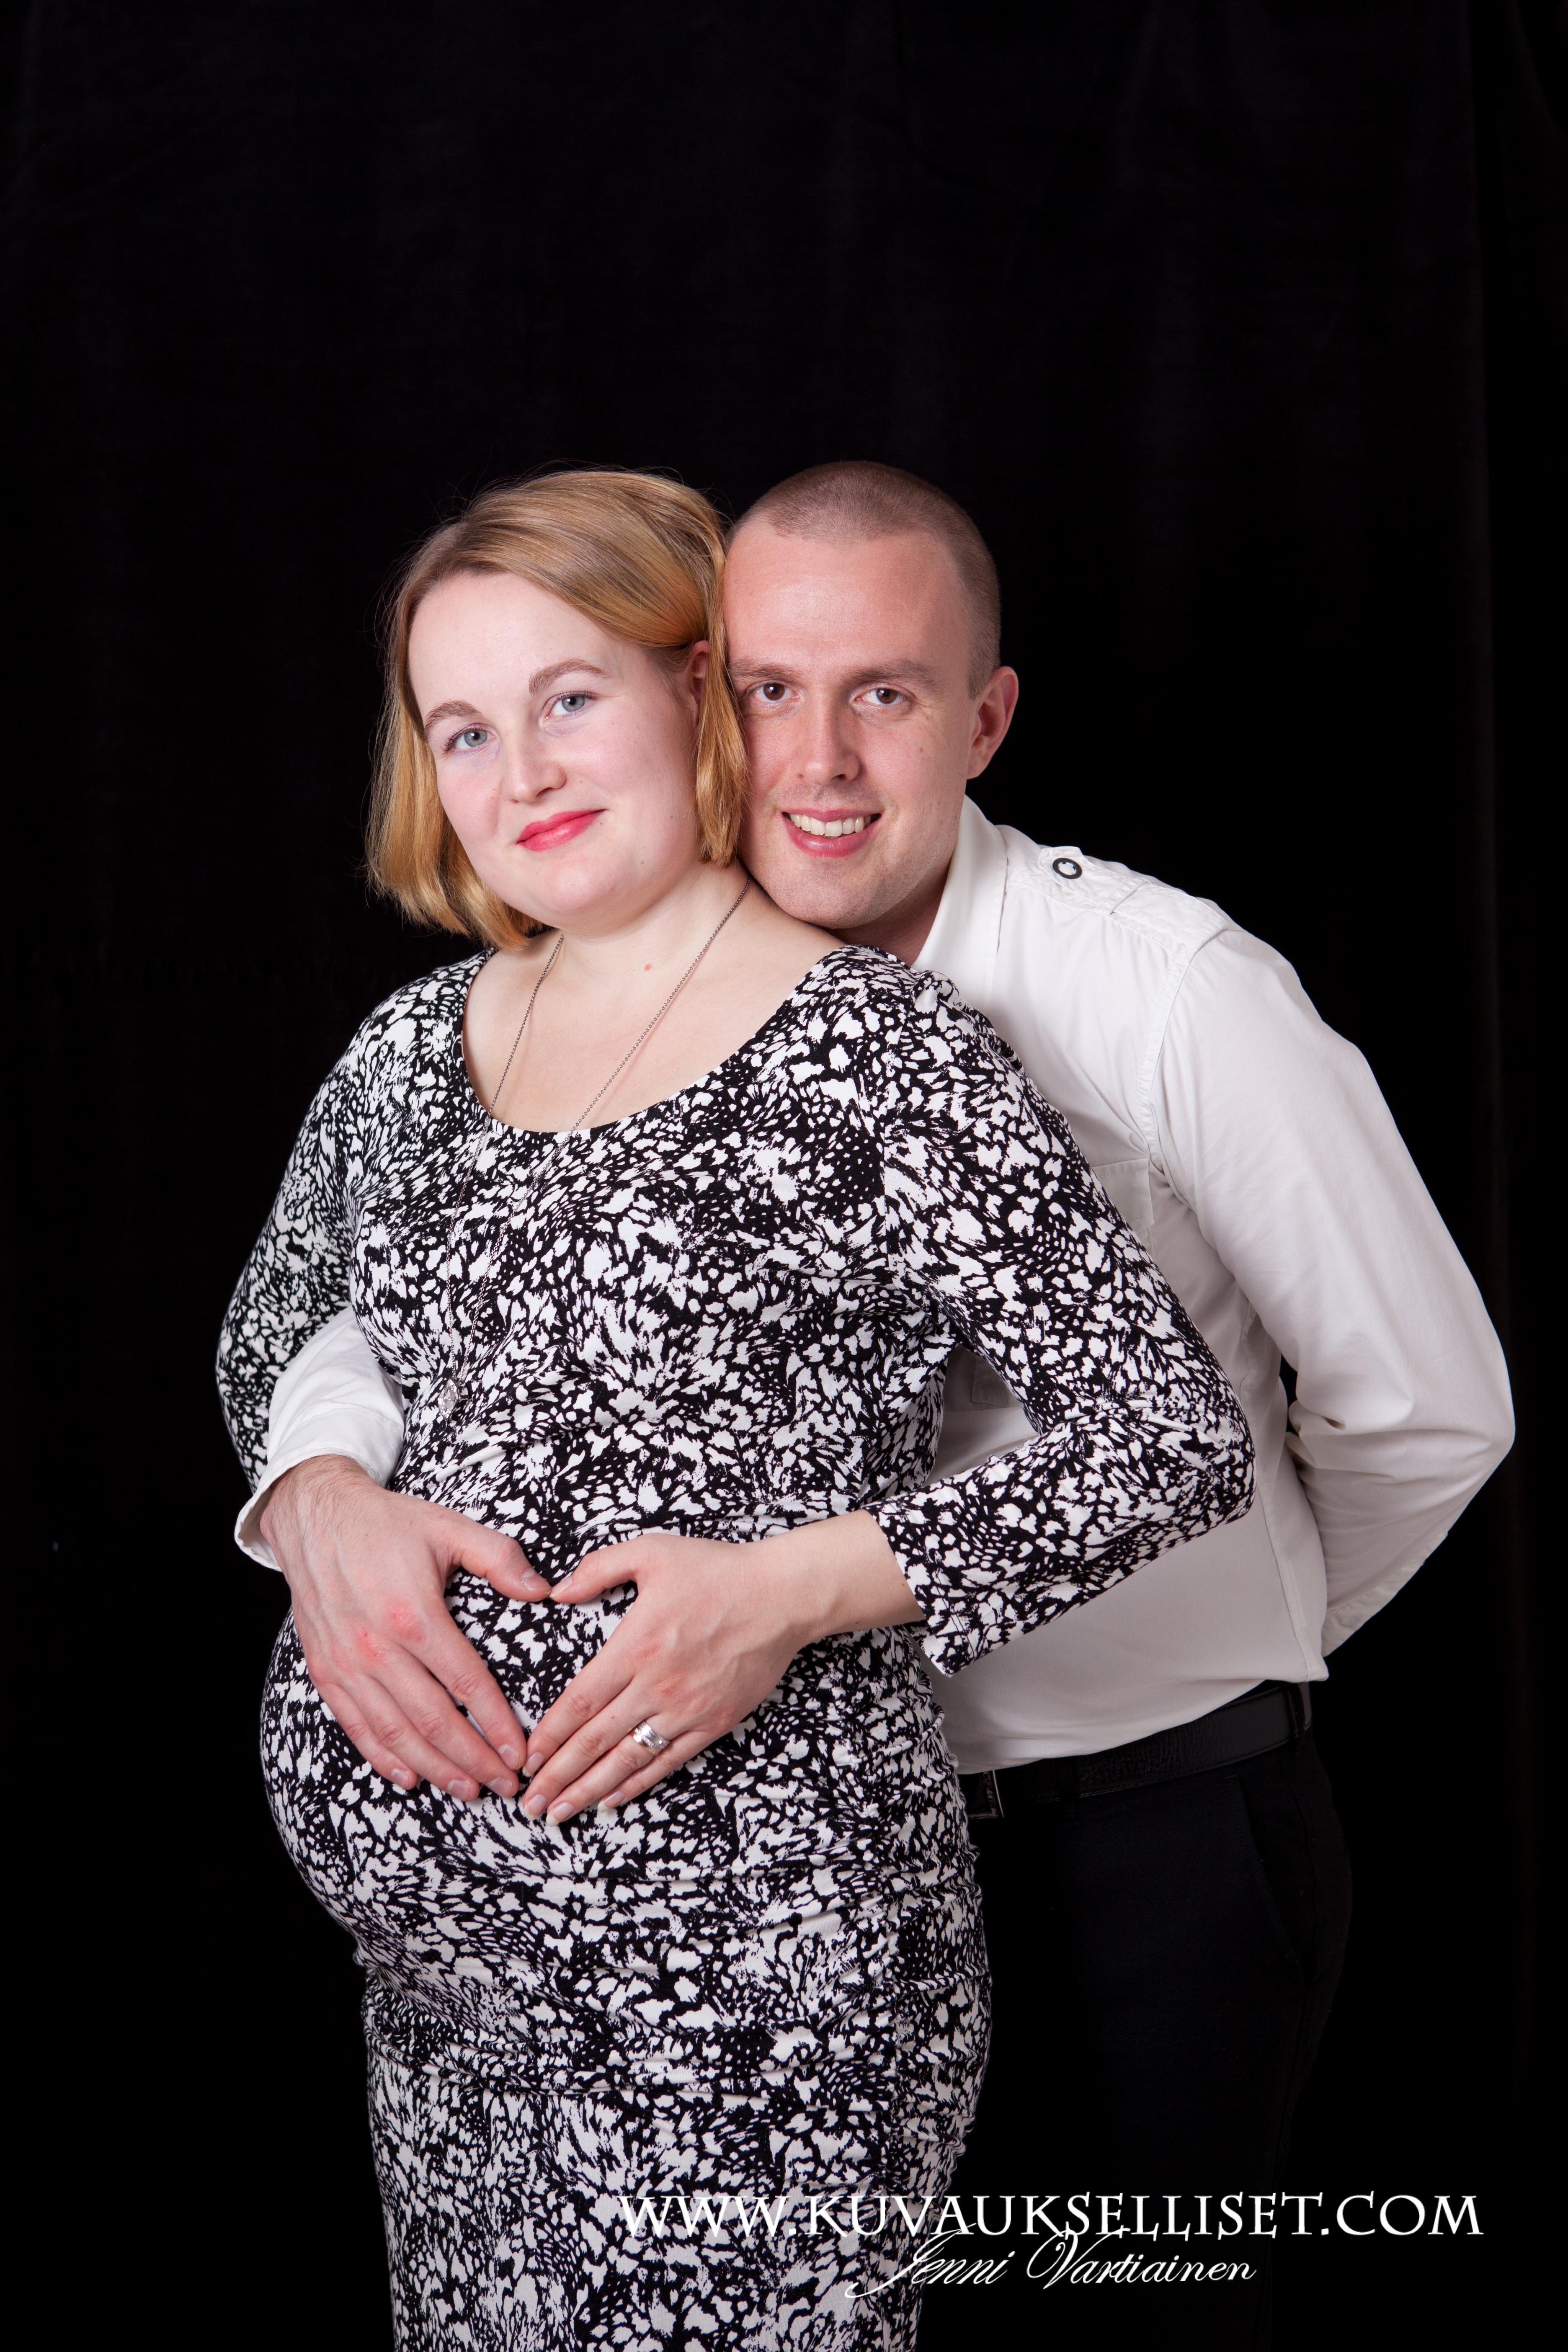 2014.10.21 mahakuvaus odotusajan kuvaus raskausajankuvaus vauvakuvaus vastasyntyneen studiokuvaus lapsikuvaus2